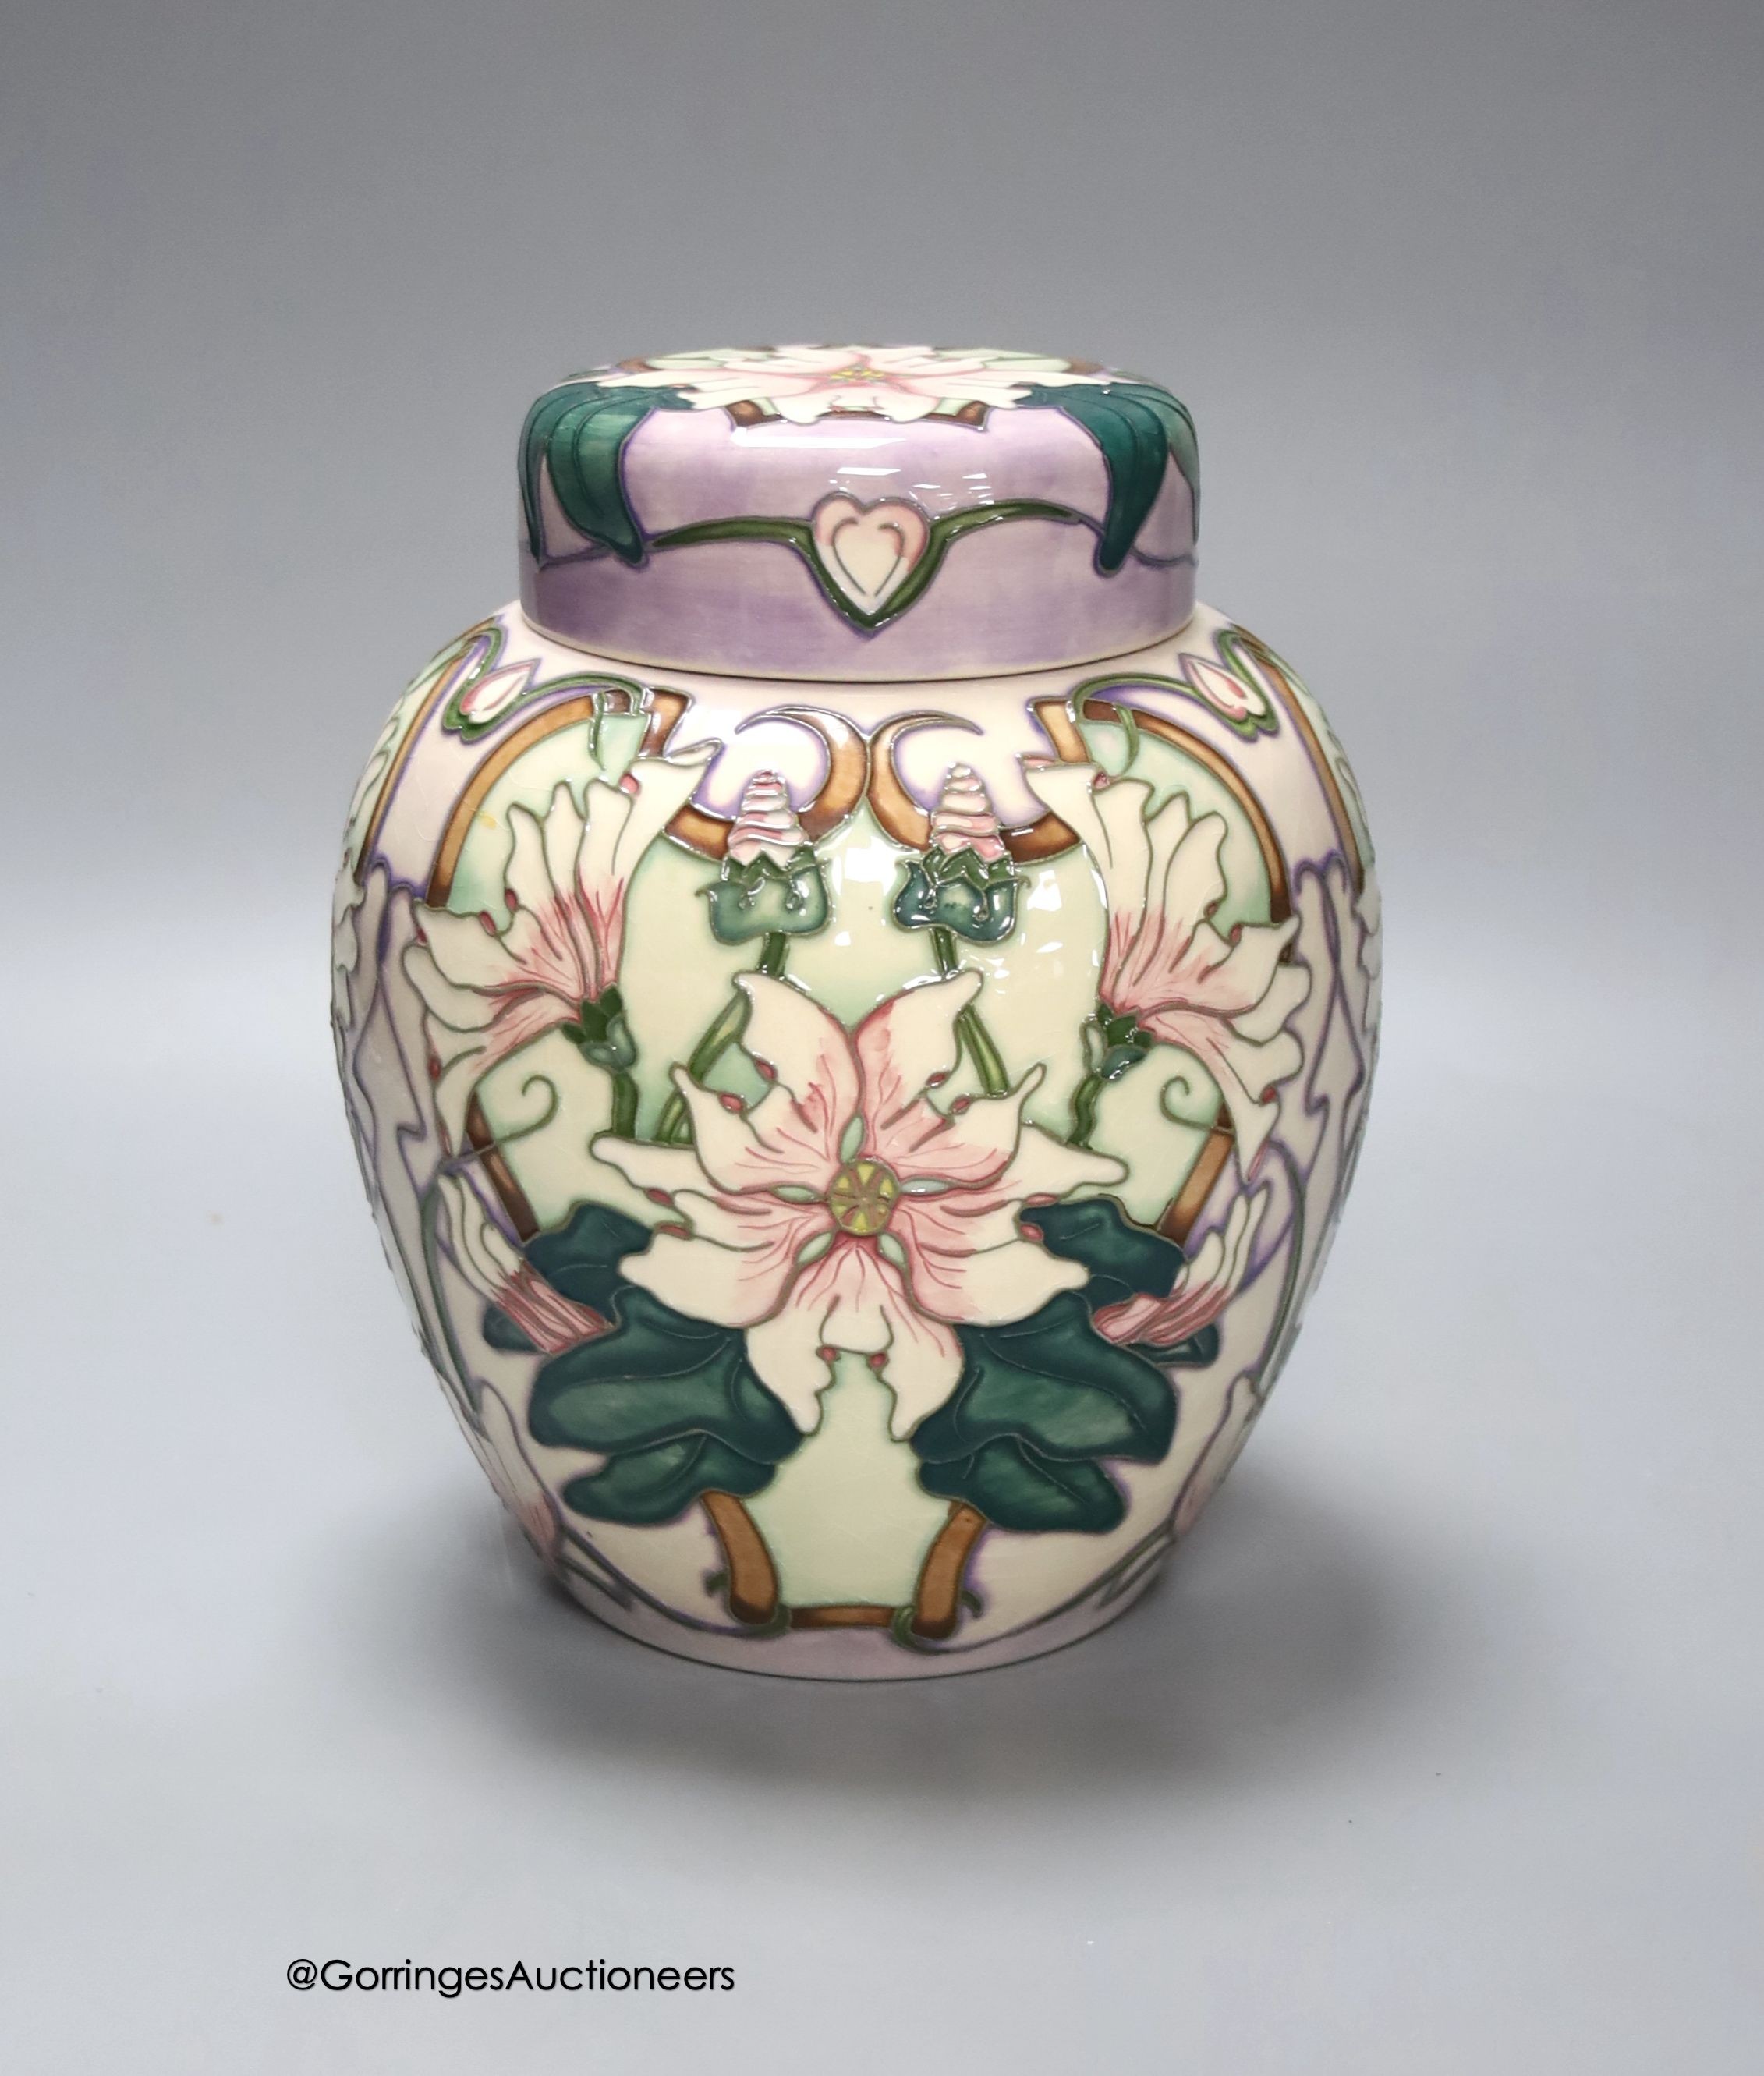 A Moorcroft floral ginger jar, Moorcroft Collectors Club 2017, signed by Nicola Slaney, height 20cm